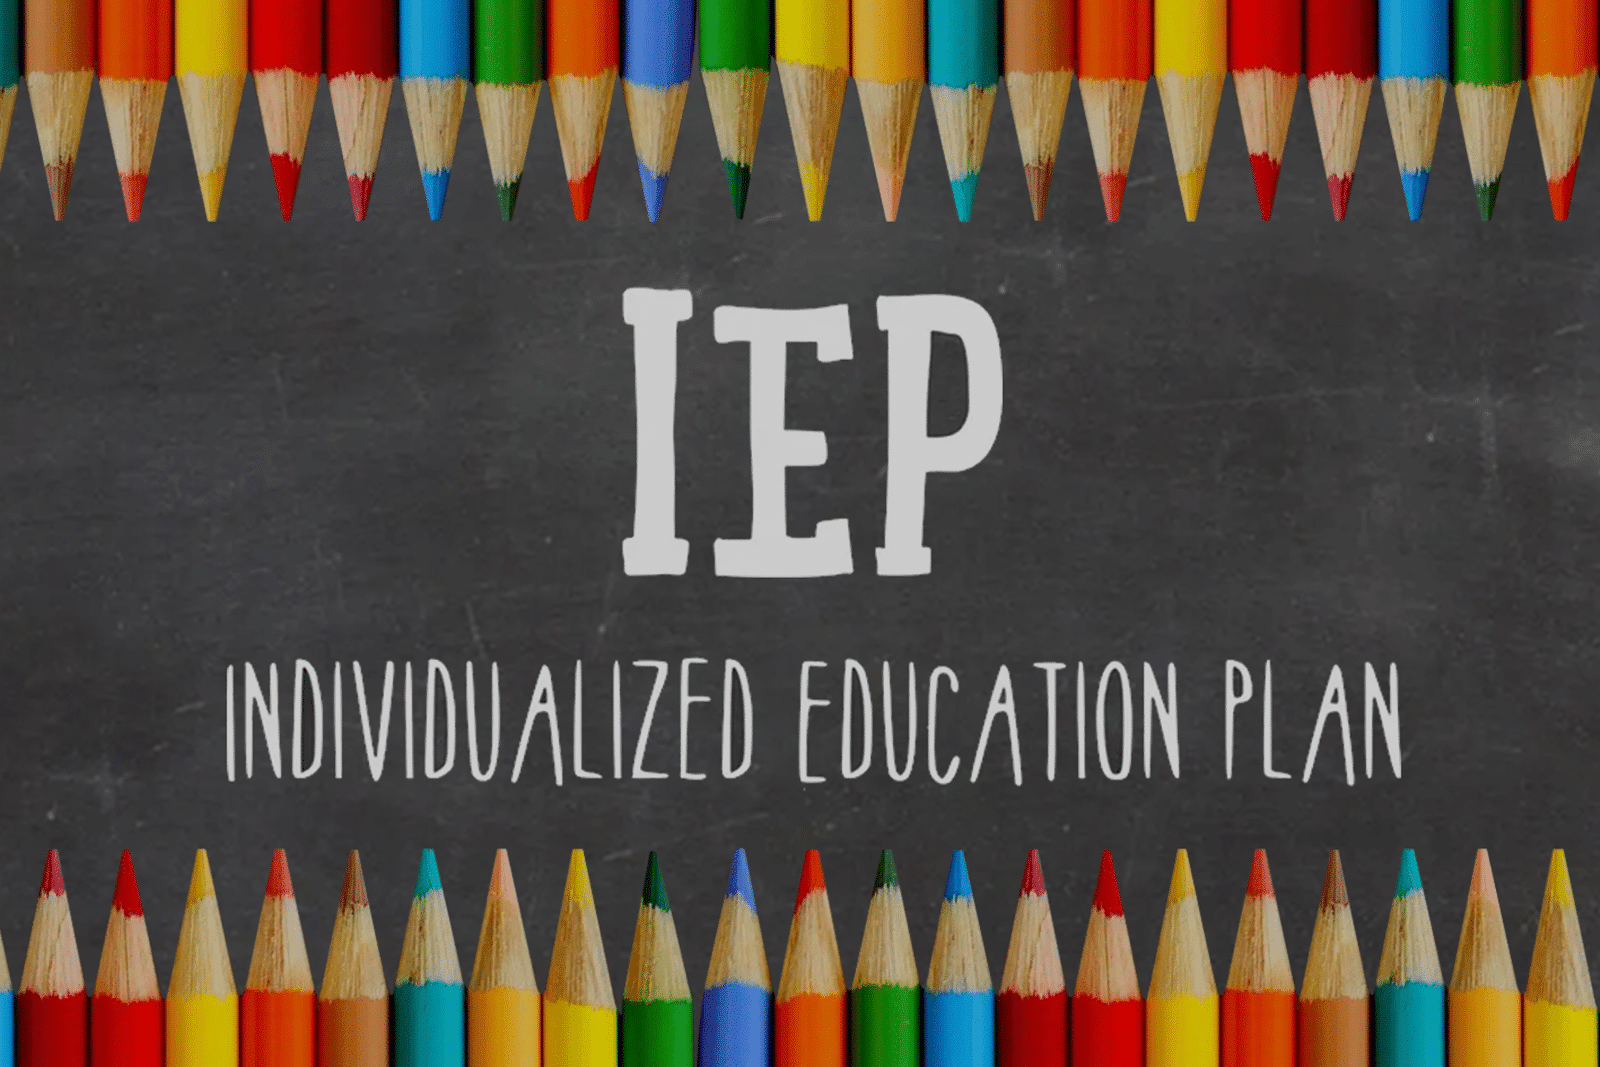 IEP Individualized Education Plan